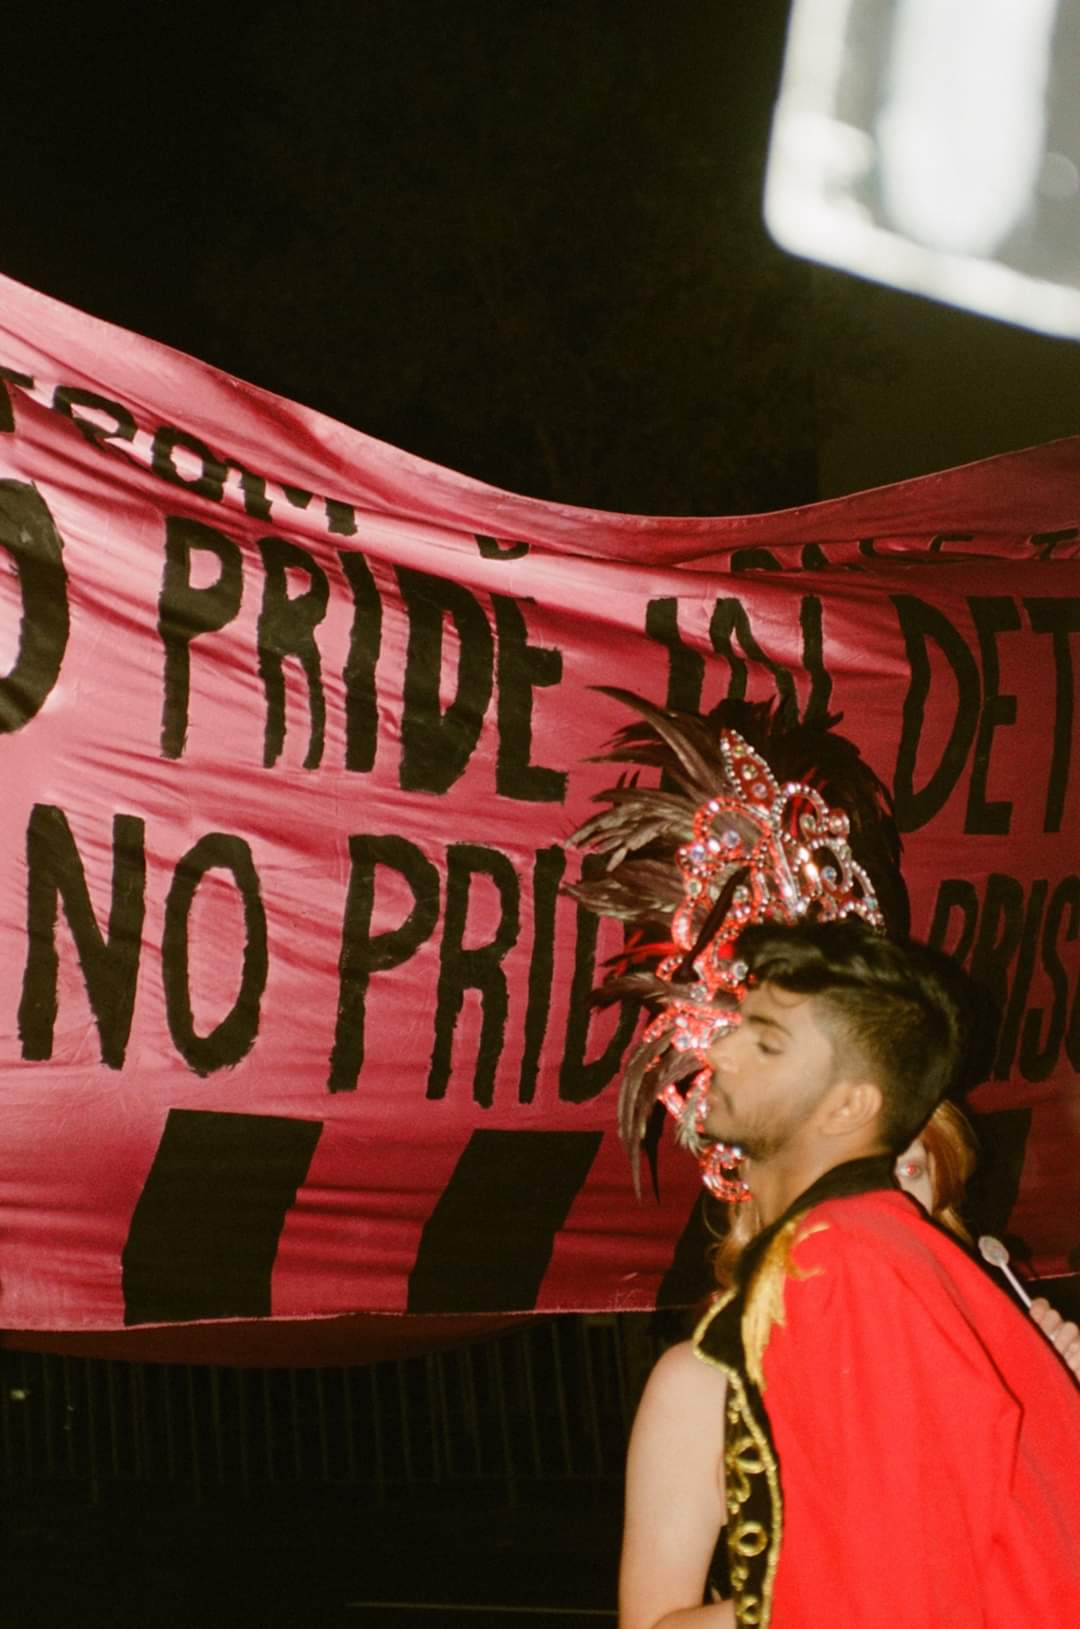 Pride in protest